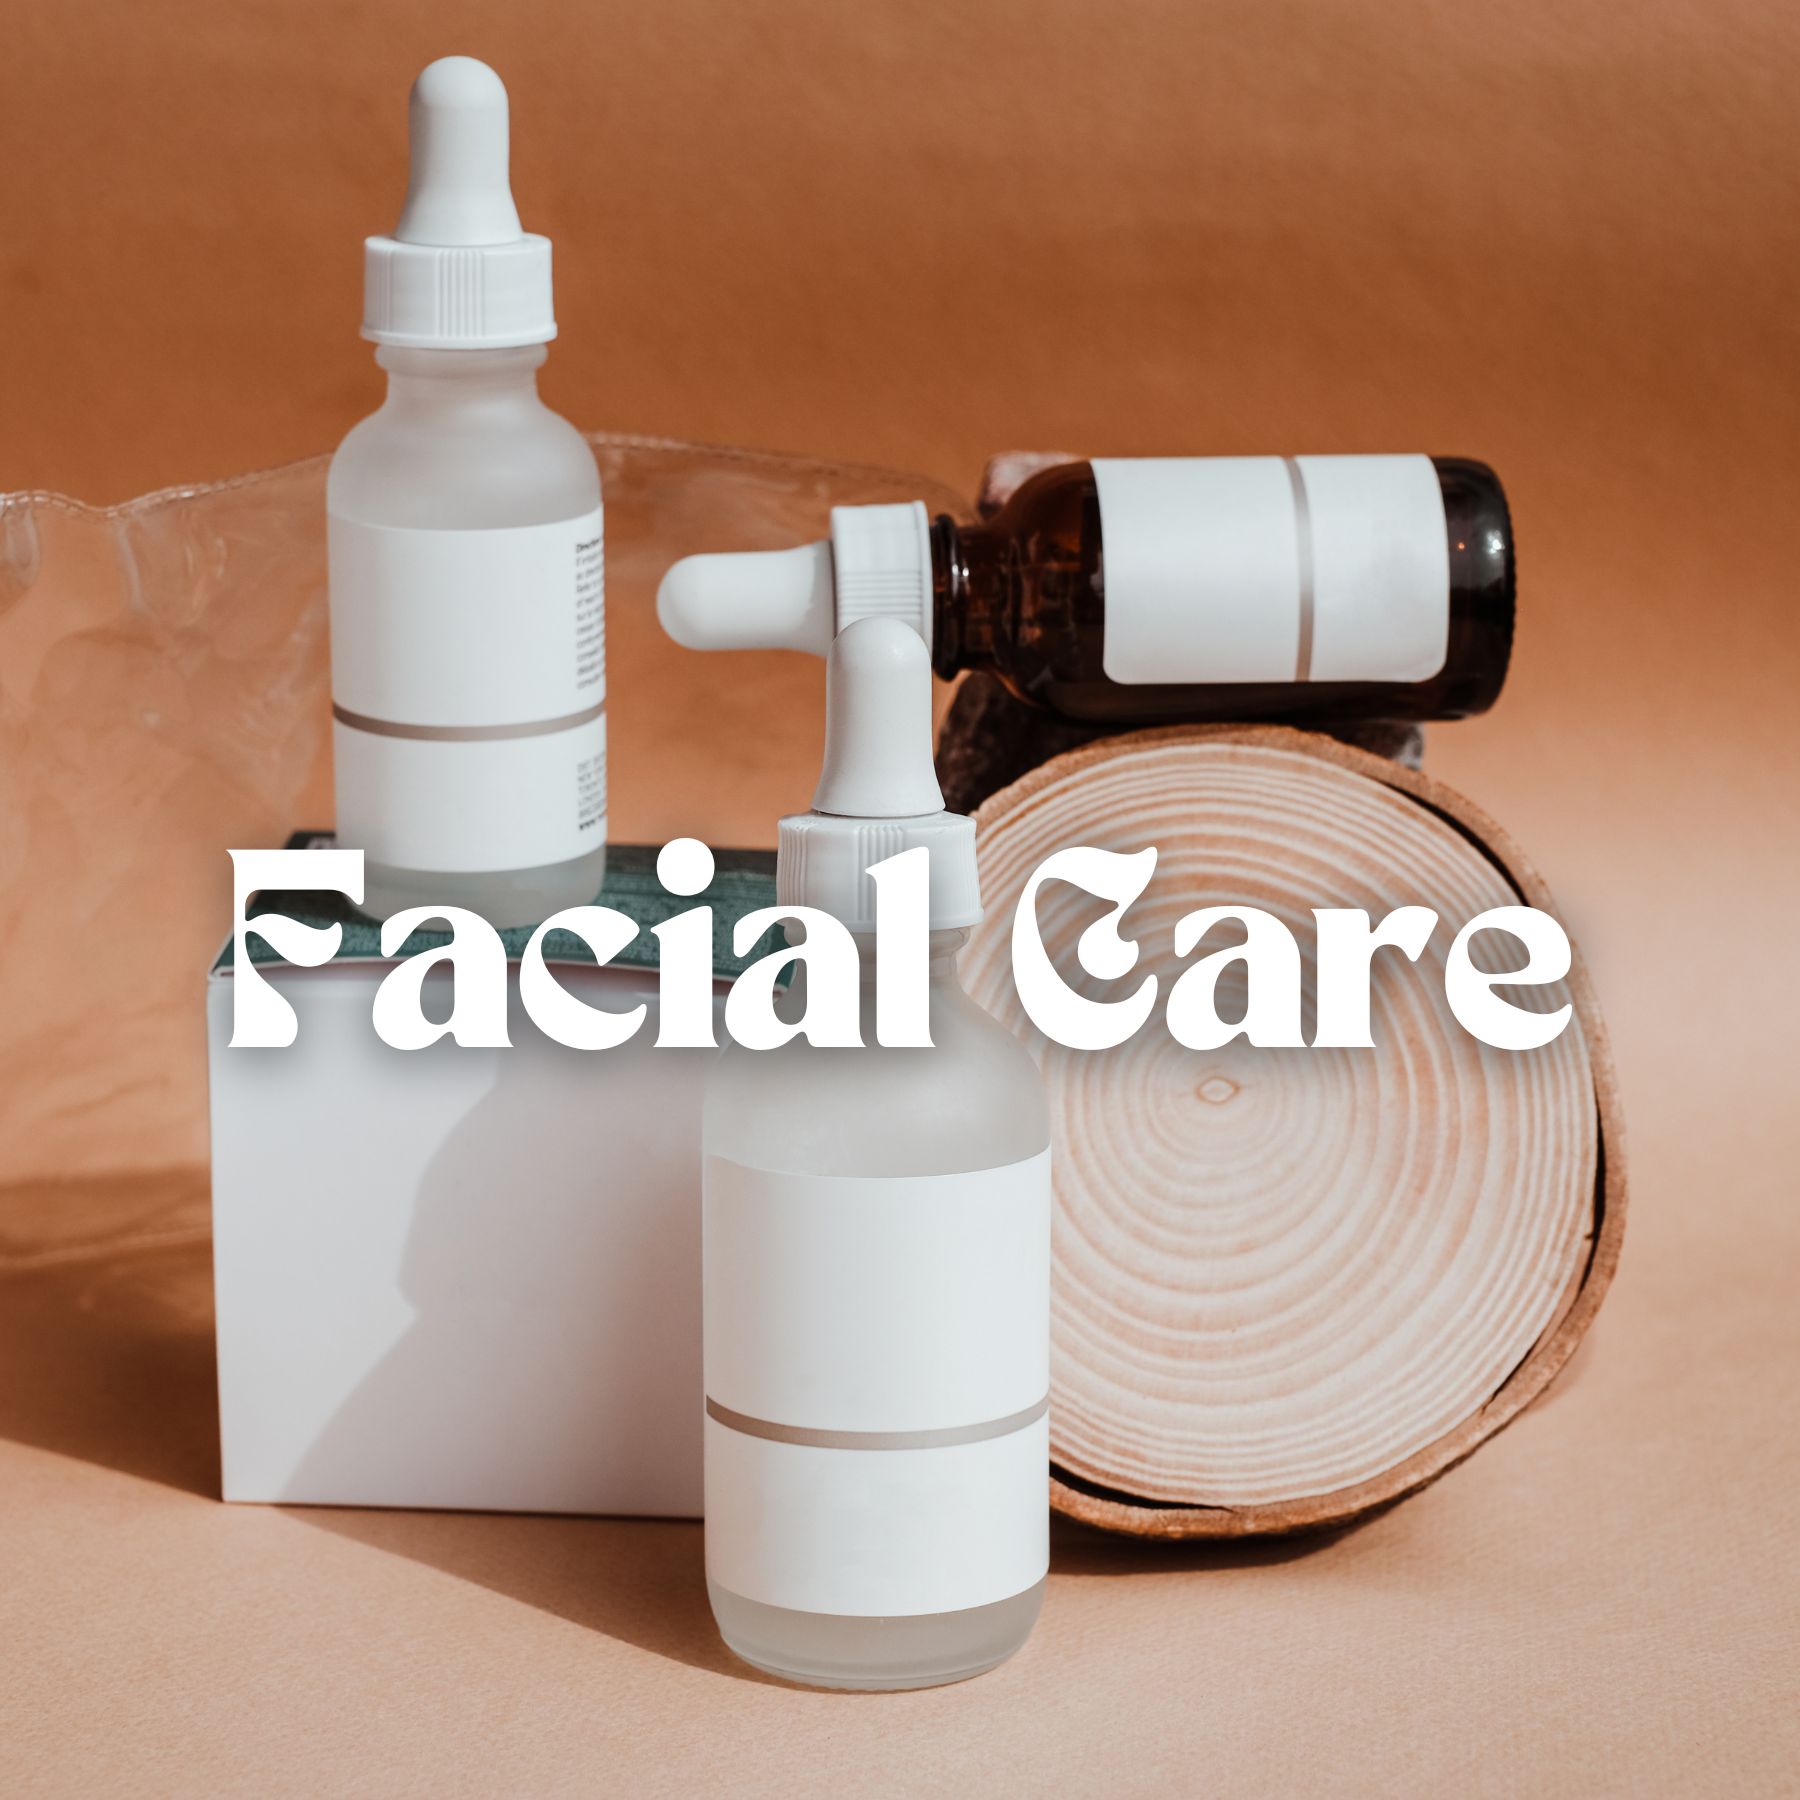 Decorative Image Says "Facial Care"